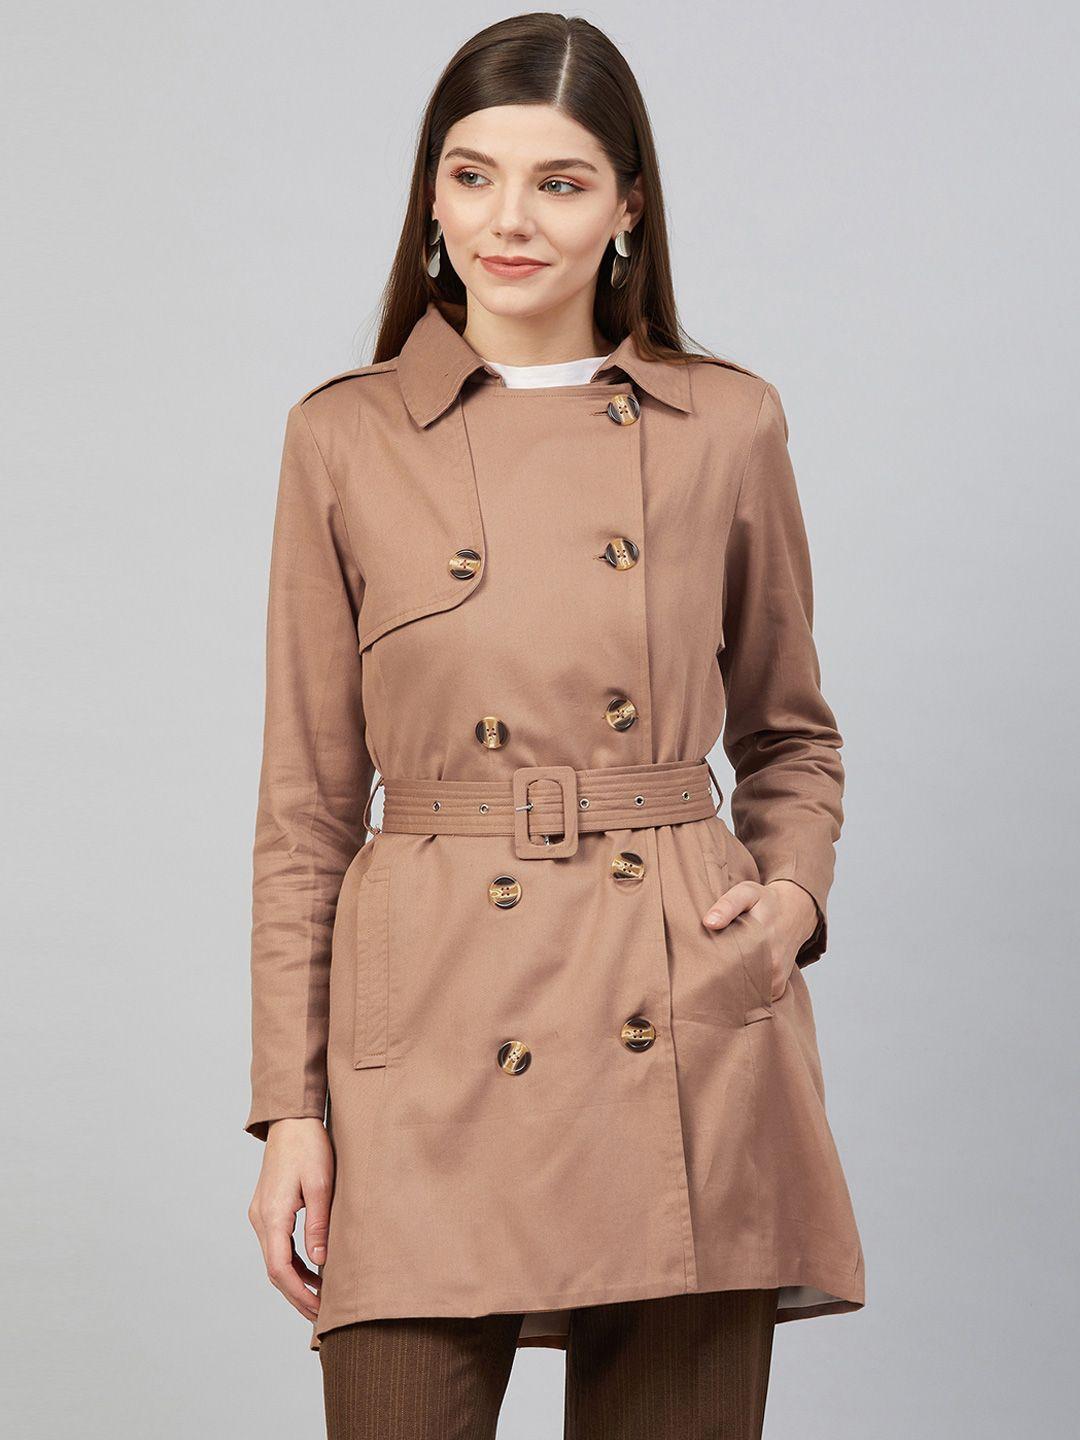 carlton london women khaki solid trench coat